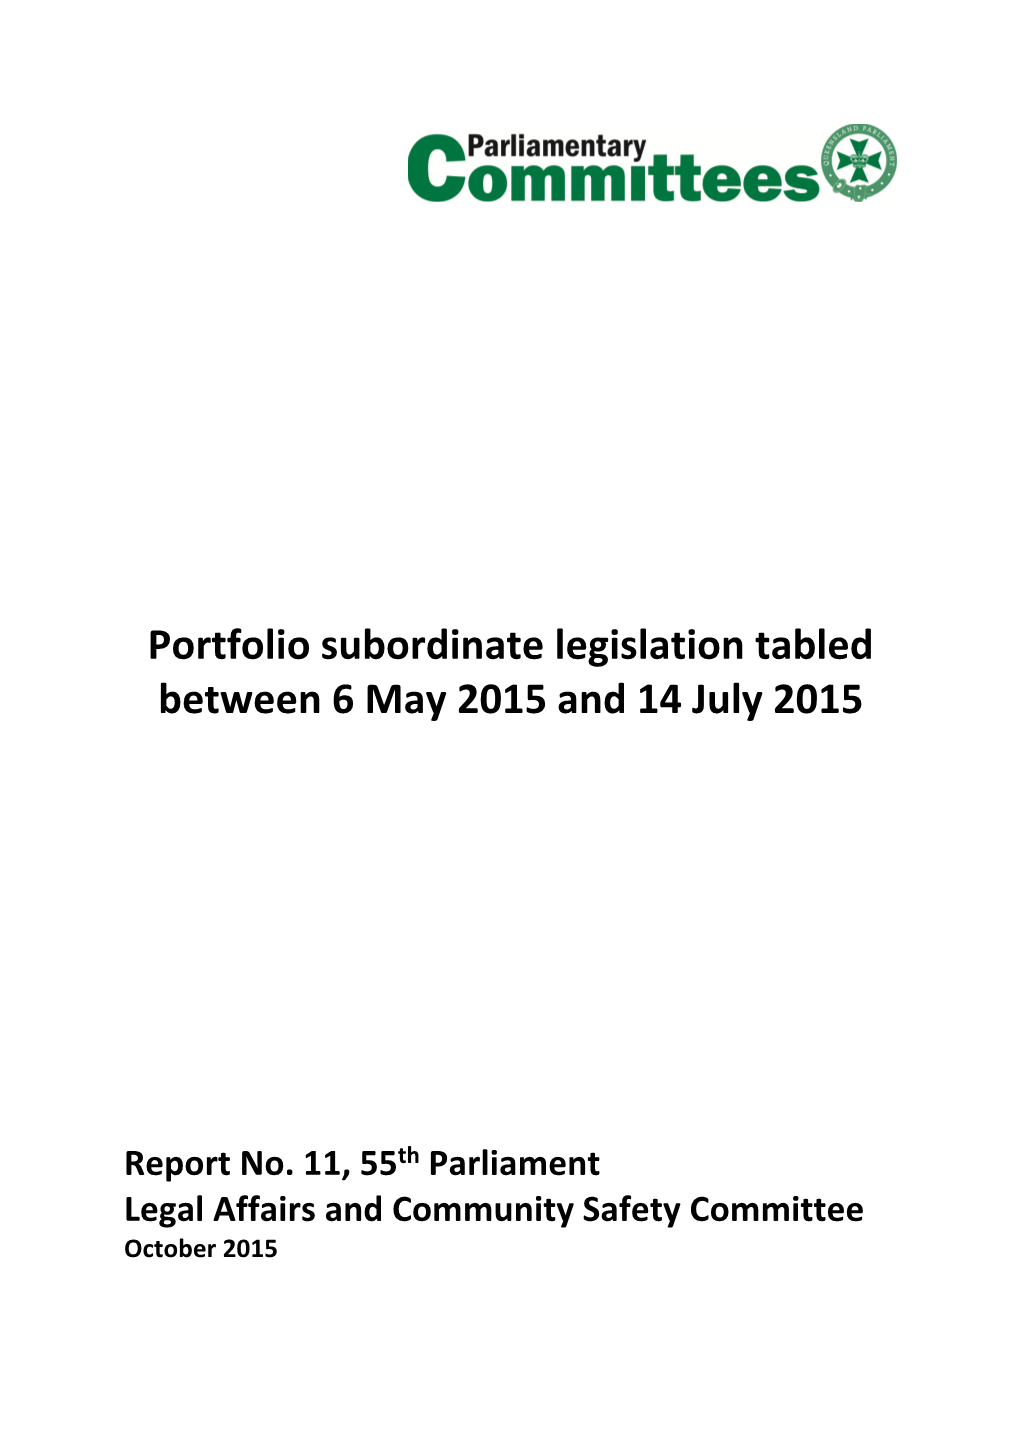 Portfolio Subordinate Legislation Tabled Between 6 May 2015 and 14 July 2015